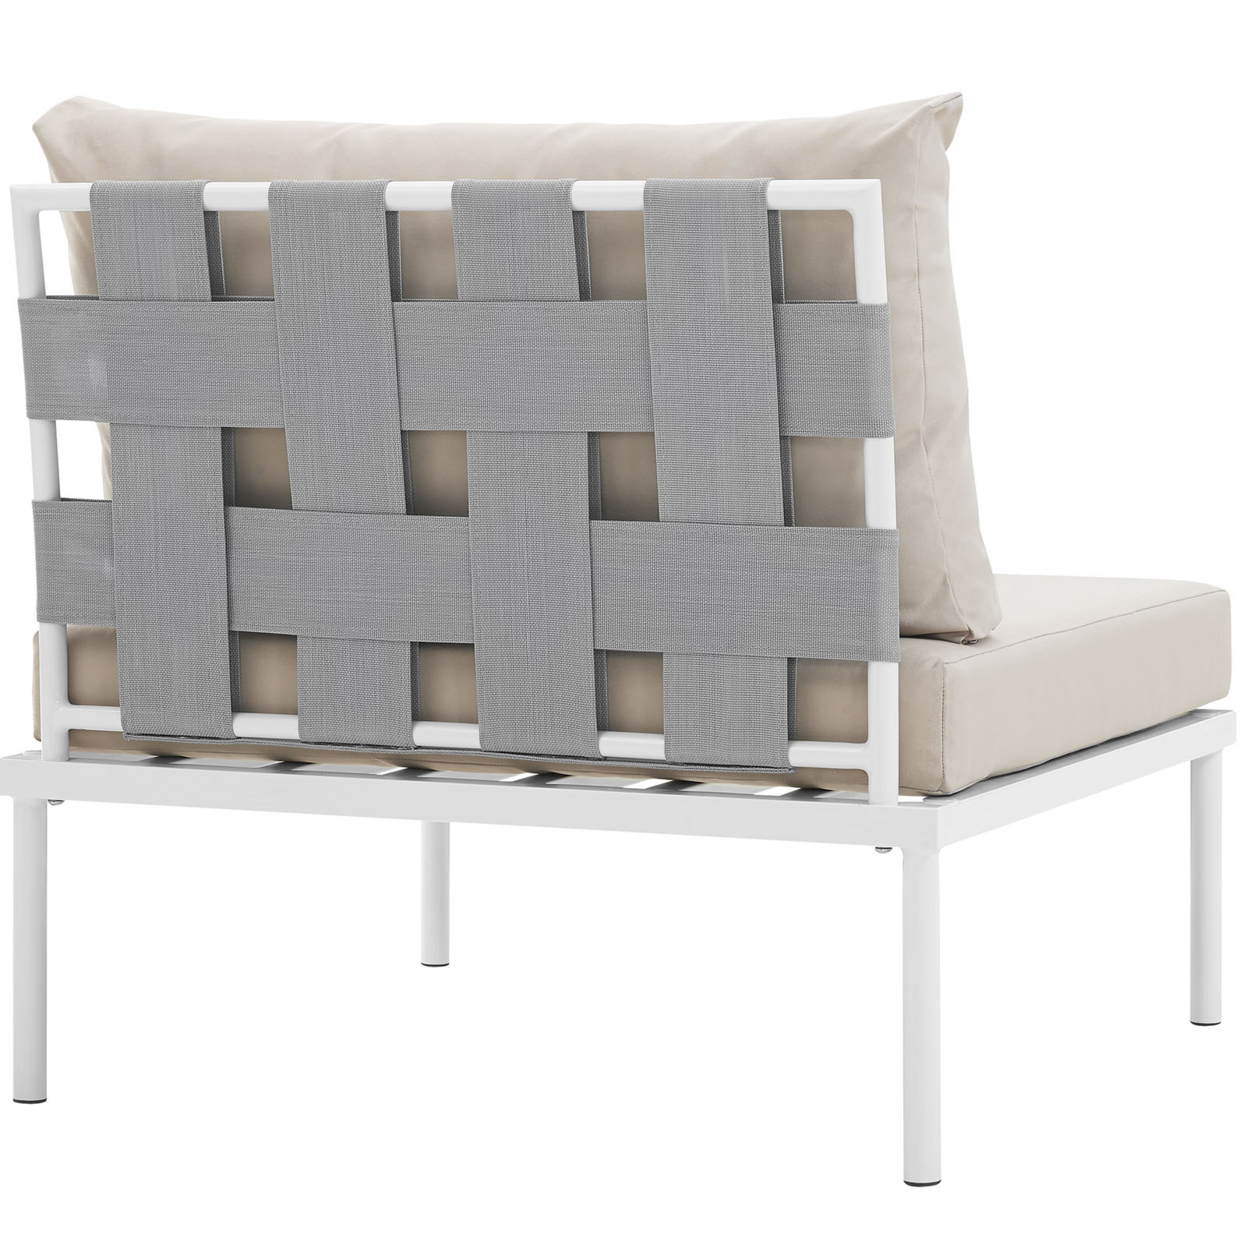 Harmony Armless Outdoor Patio Aluminum Chair, White Beige